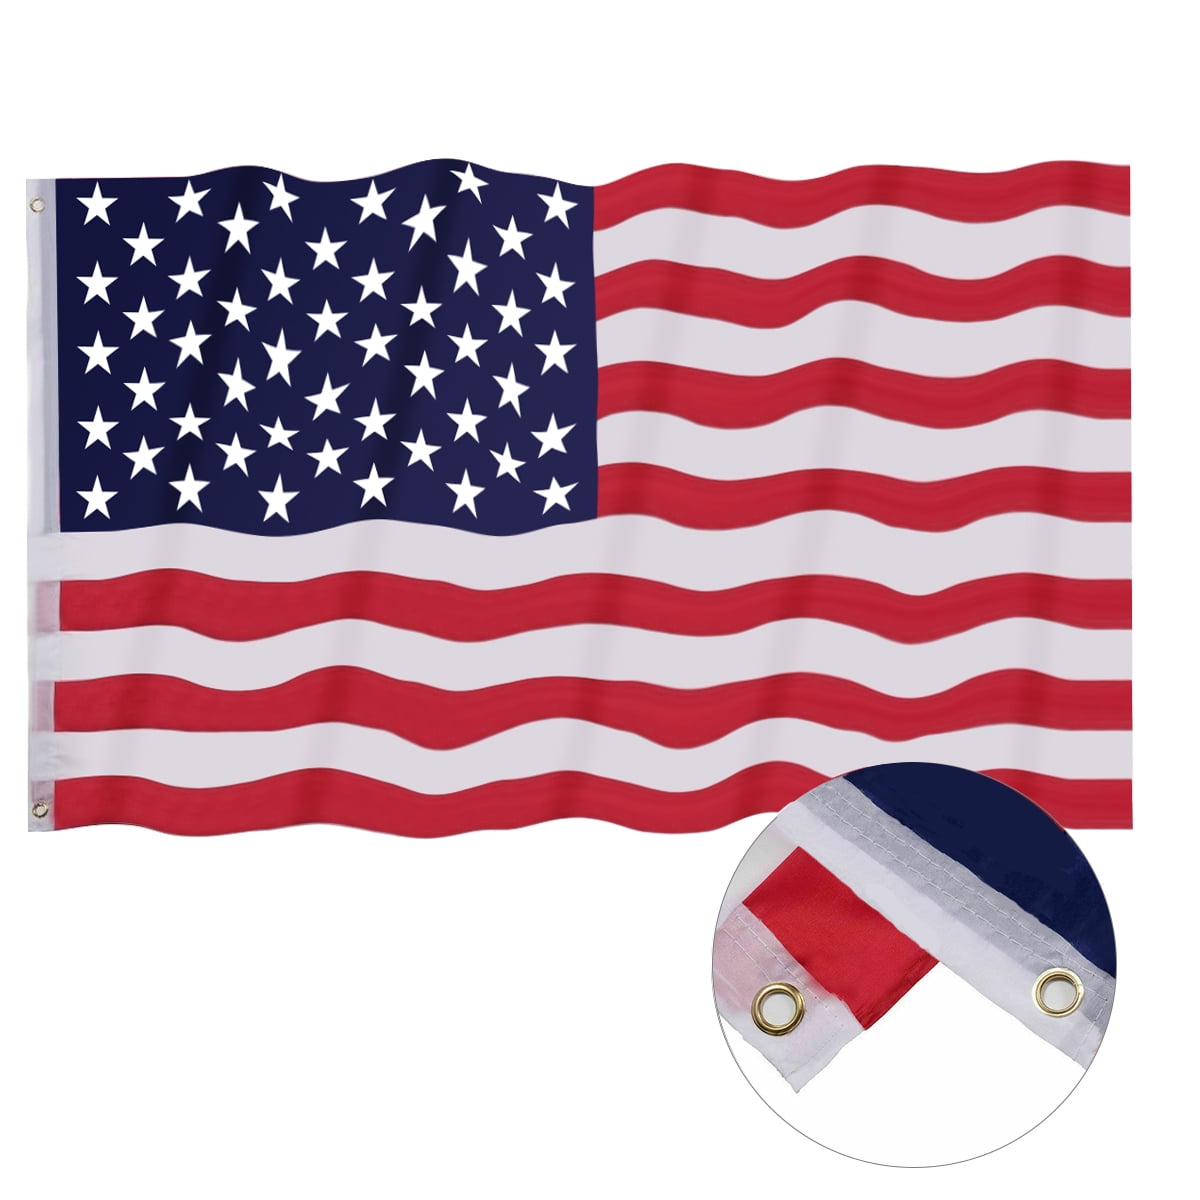 New 2 x 3 Ft U.S American Flag USA Polyester Stars Brass Grommets 0003